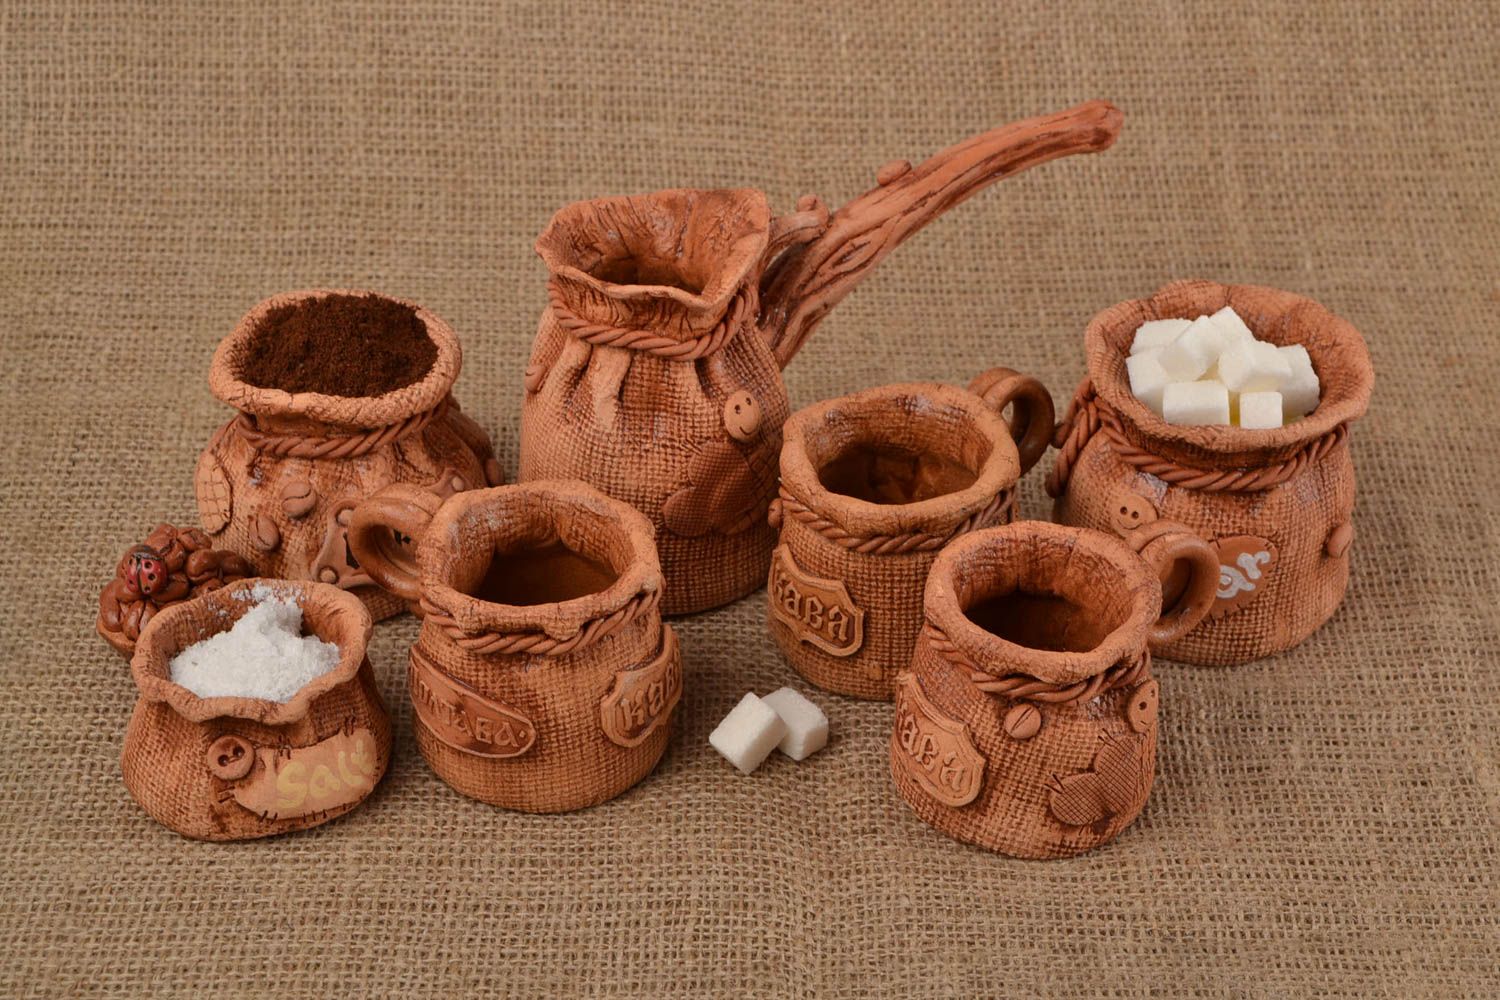  Clay brow decorative pottery set in 7 pieces - three espresso cups, coffee turk, sugar, and salt jars photo 1